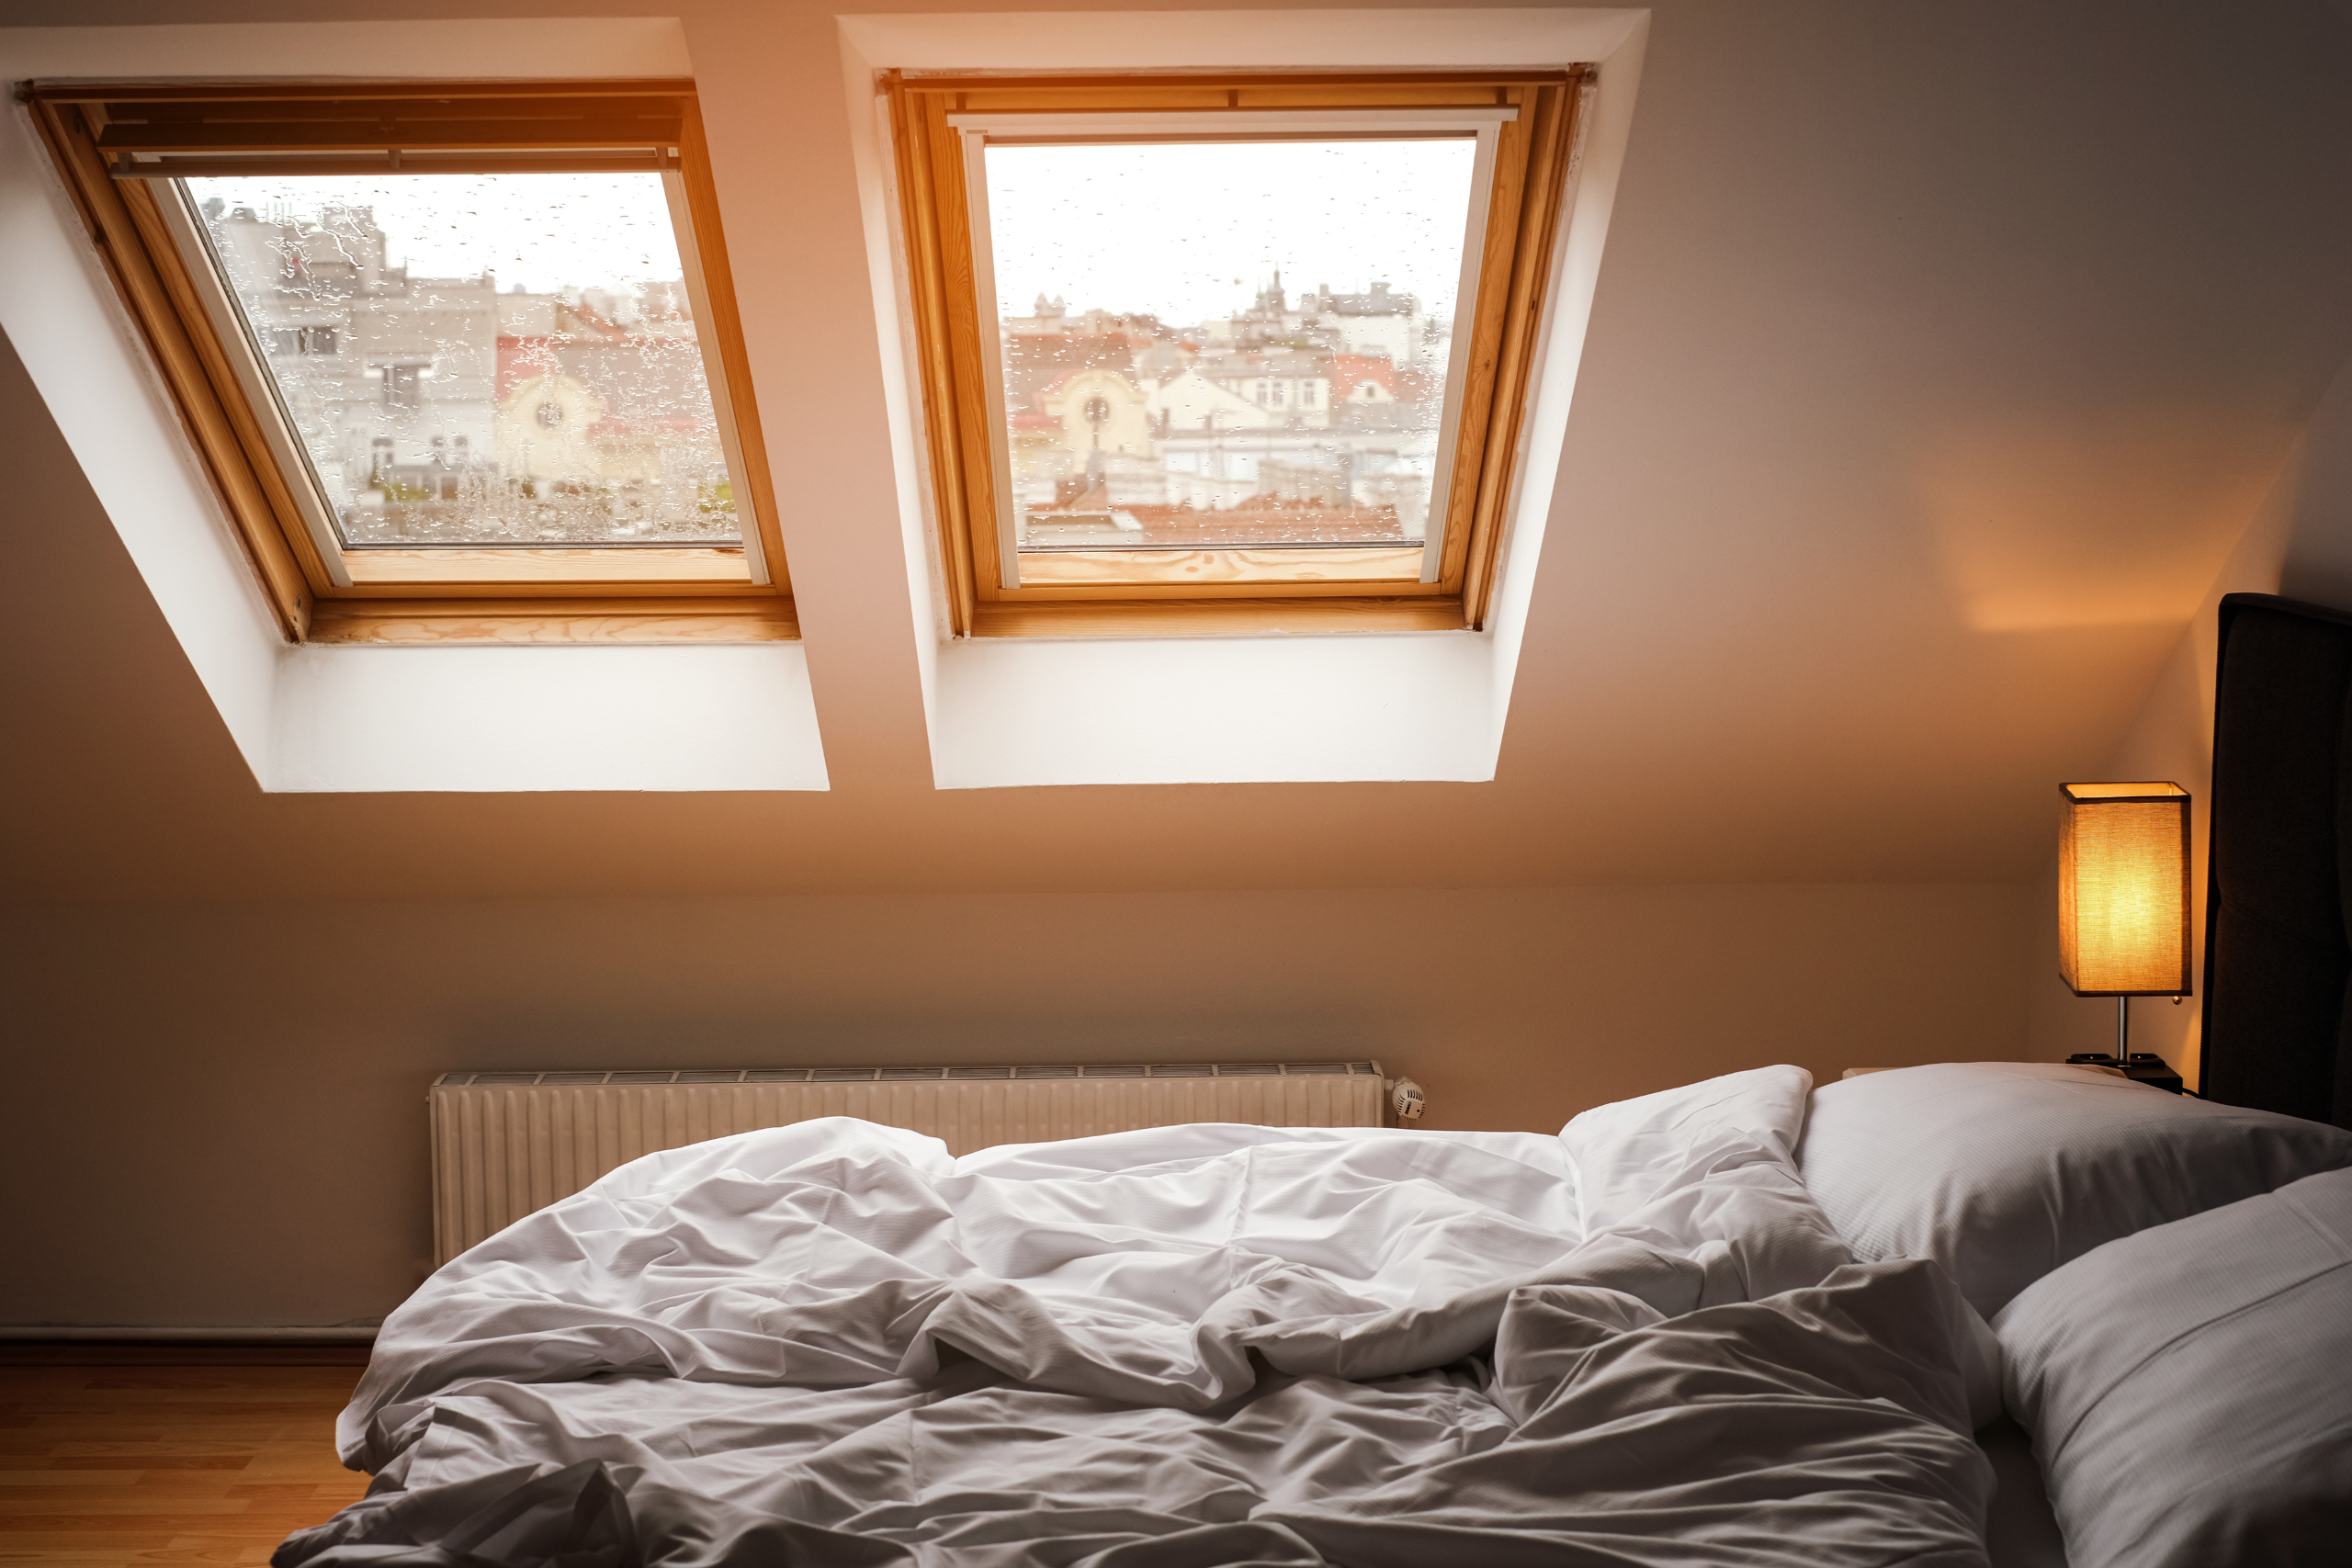 Rooflight Installation: Will It Help My Sleep?